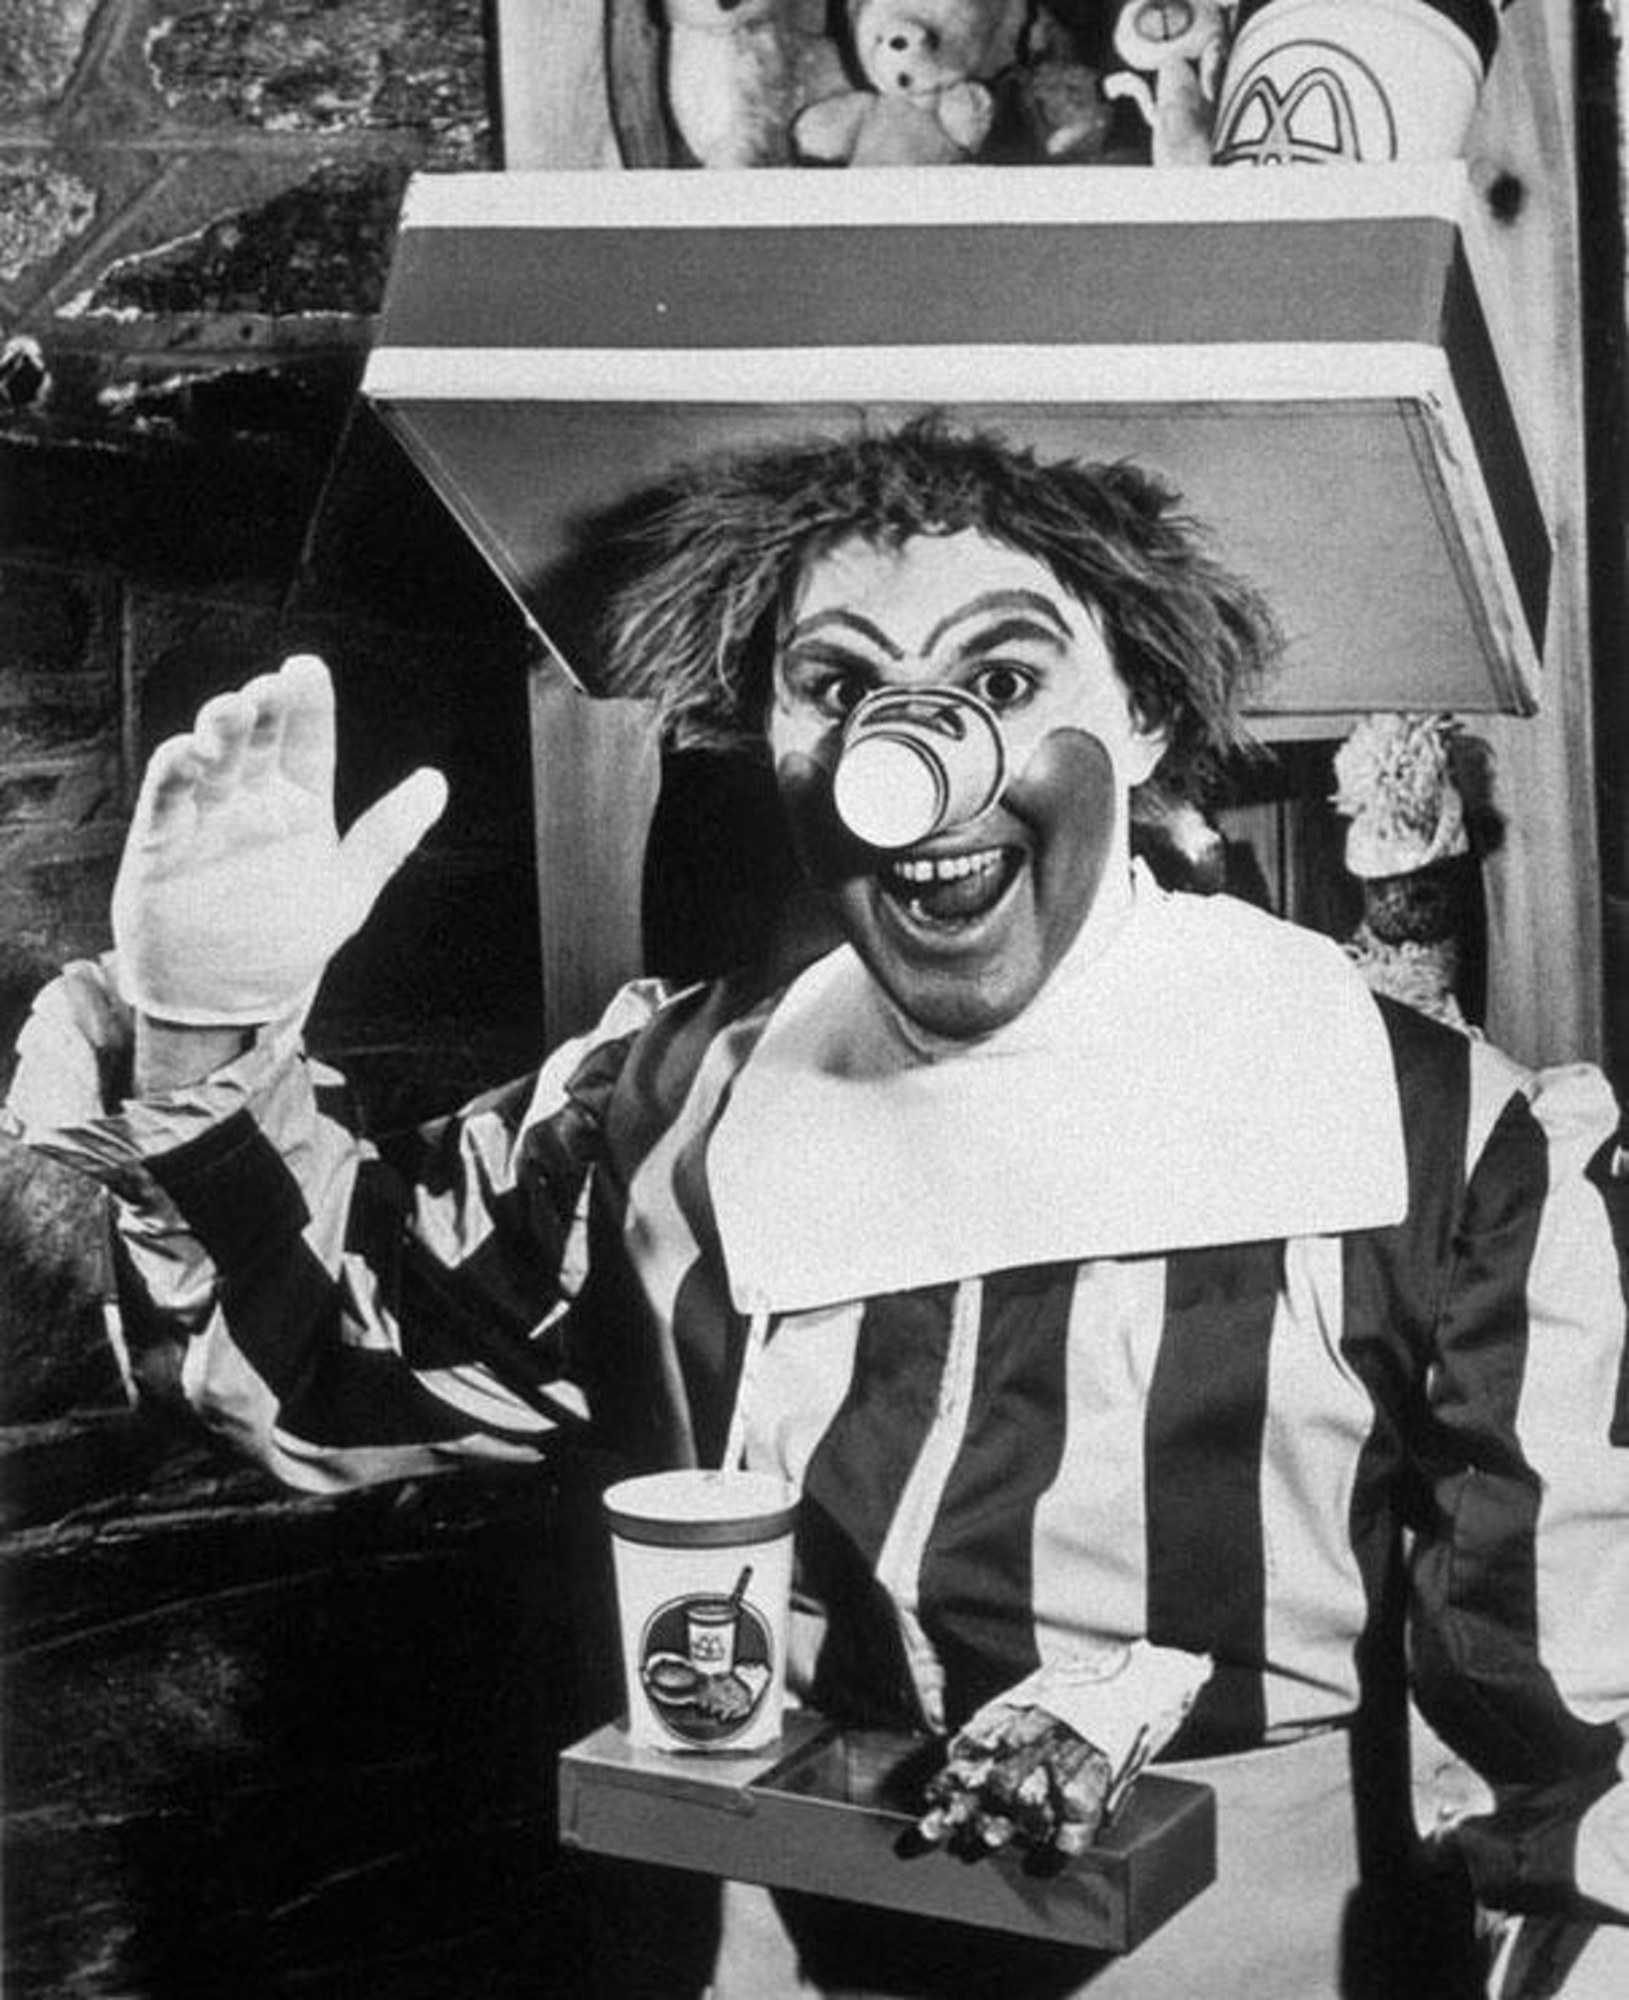 retro photo of original McDonalds clown